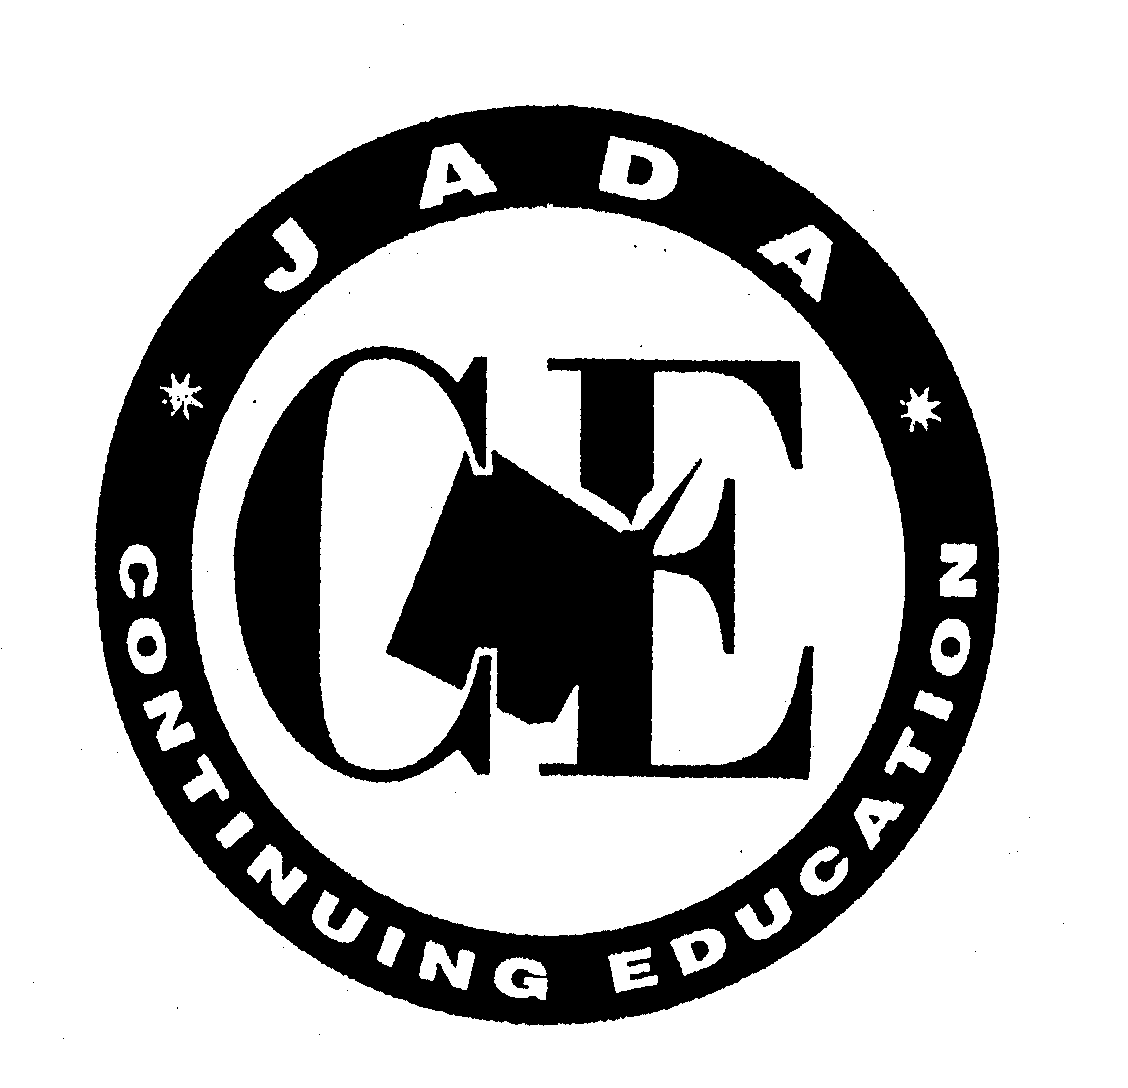  JADA CE CONTINUING EDUCATION